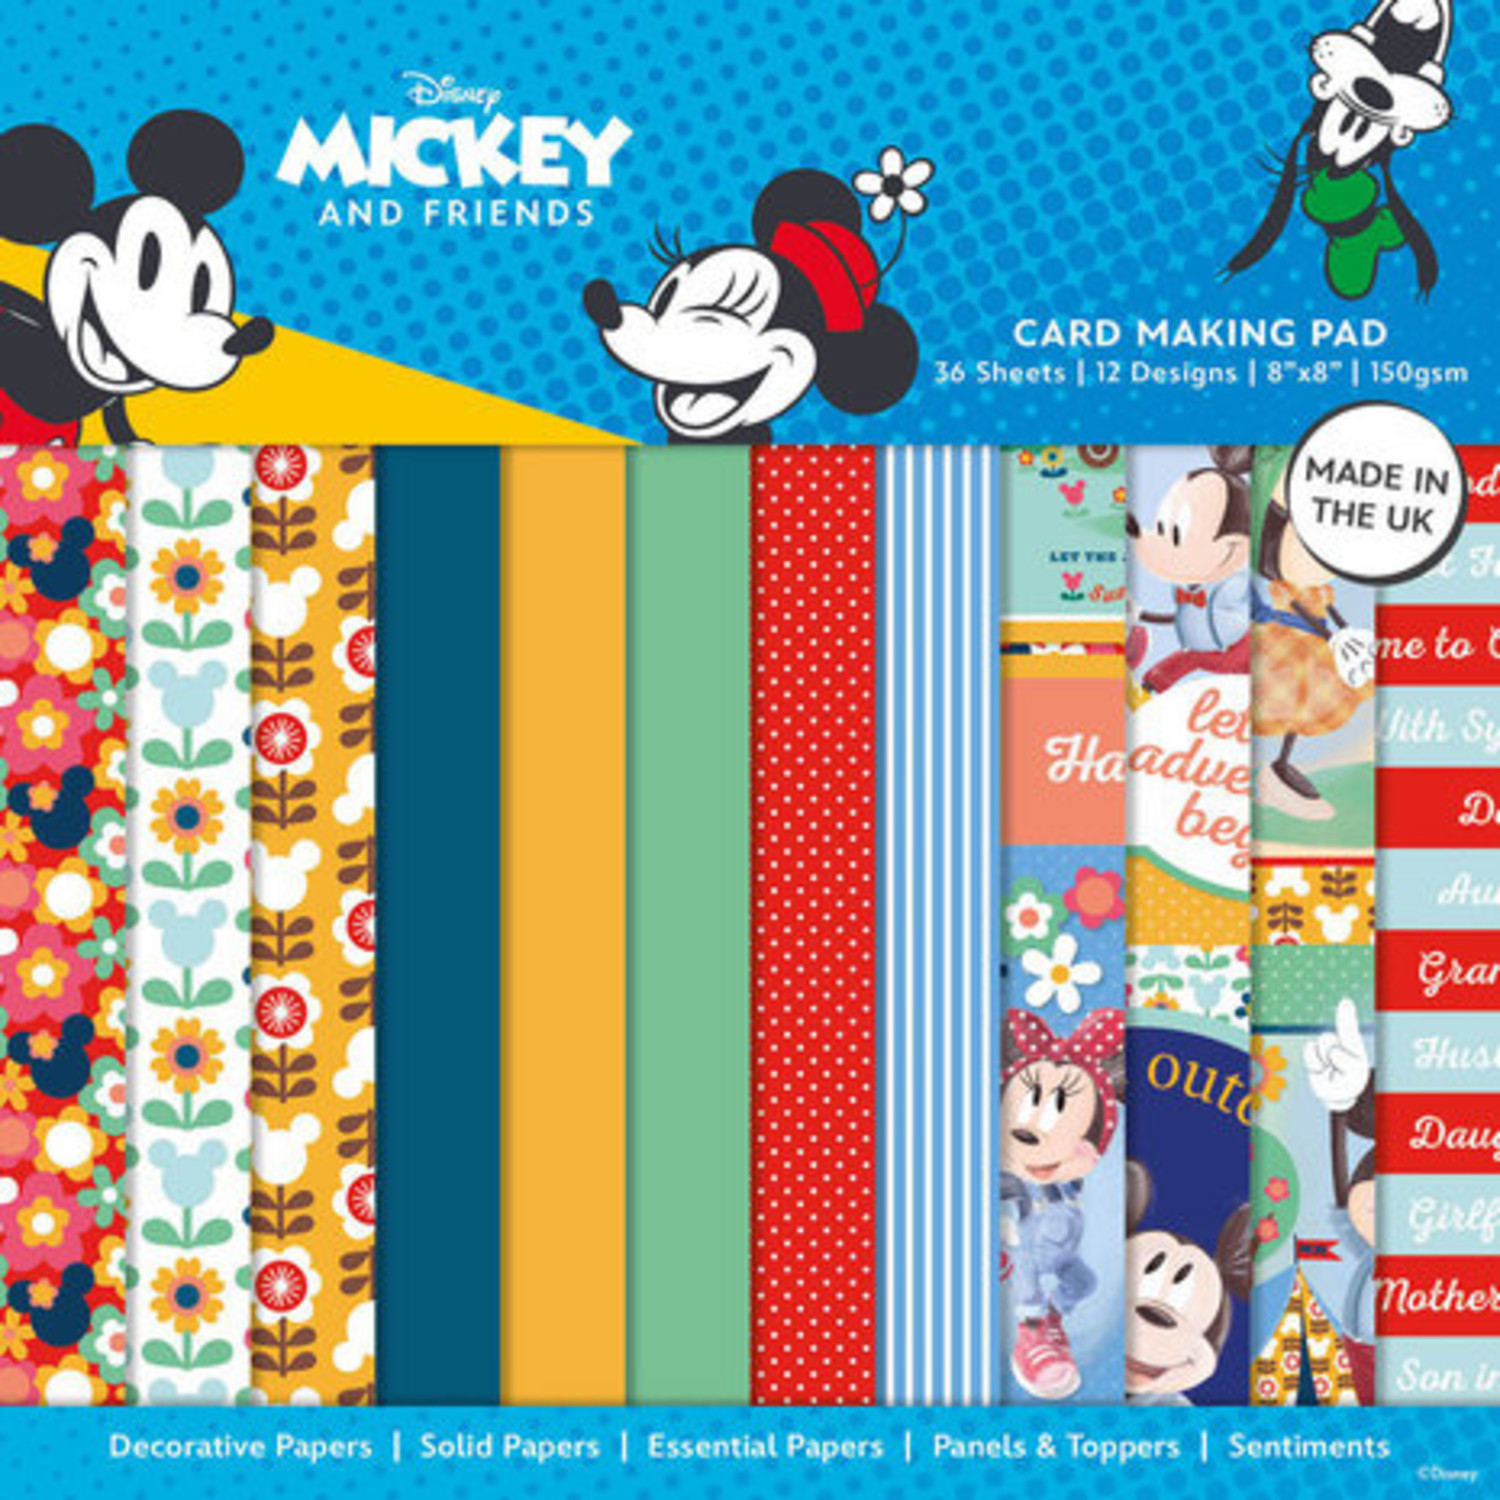 Disney Mickey and Friends Memories 8x8 Scrapbook Album by EK Success New